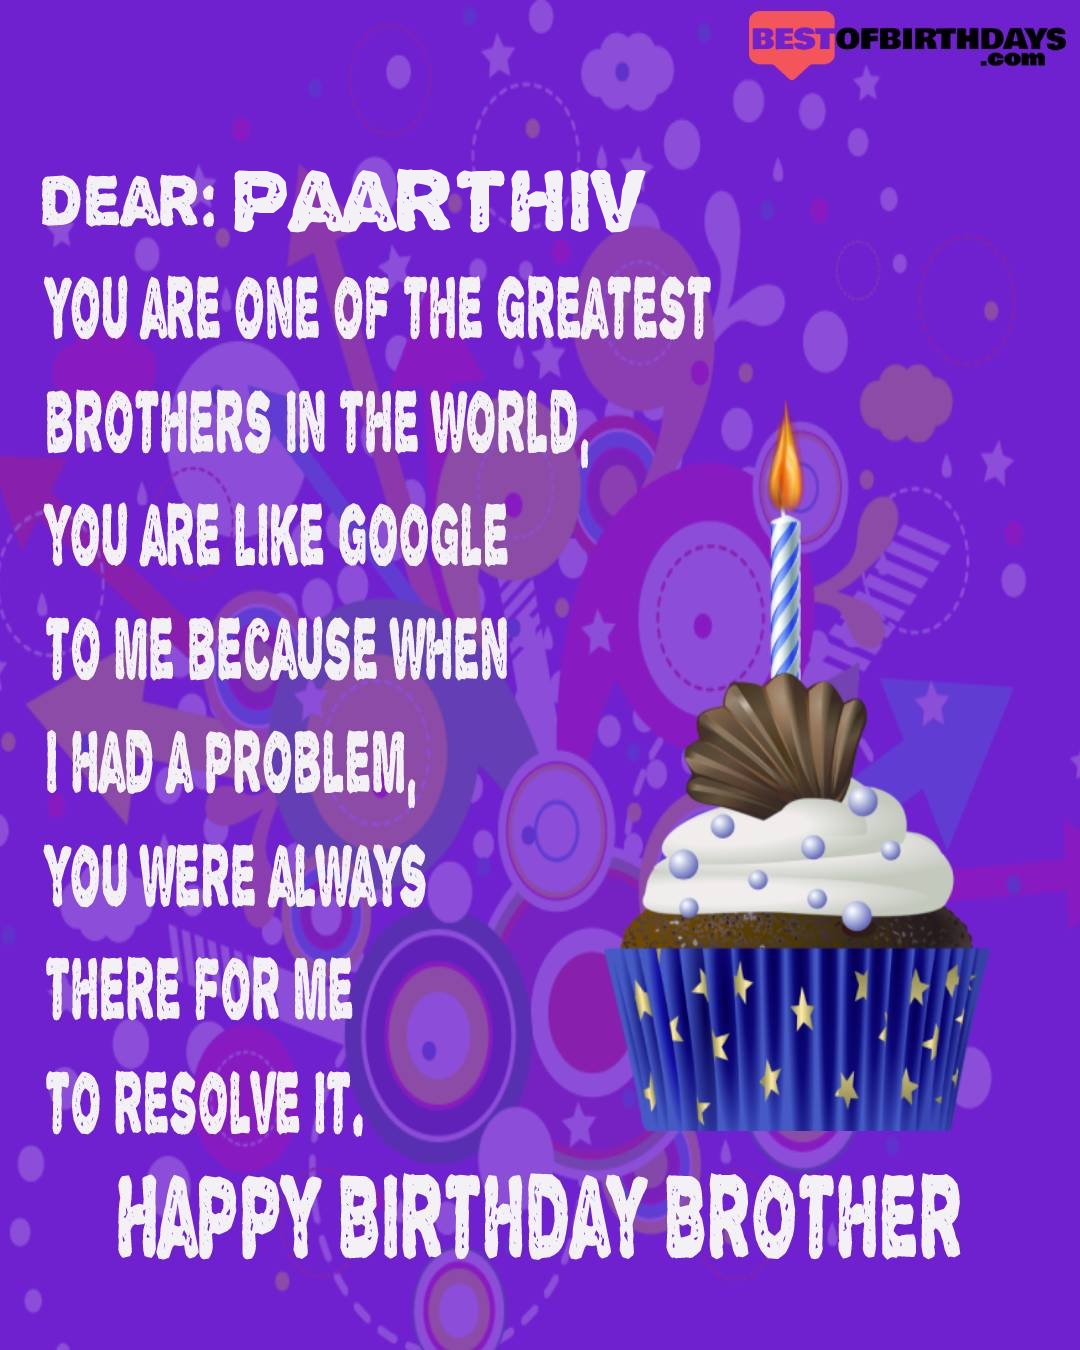 Happy birthday paarthiv bhai brother bro